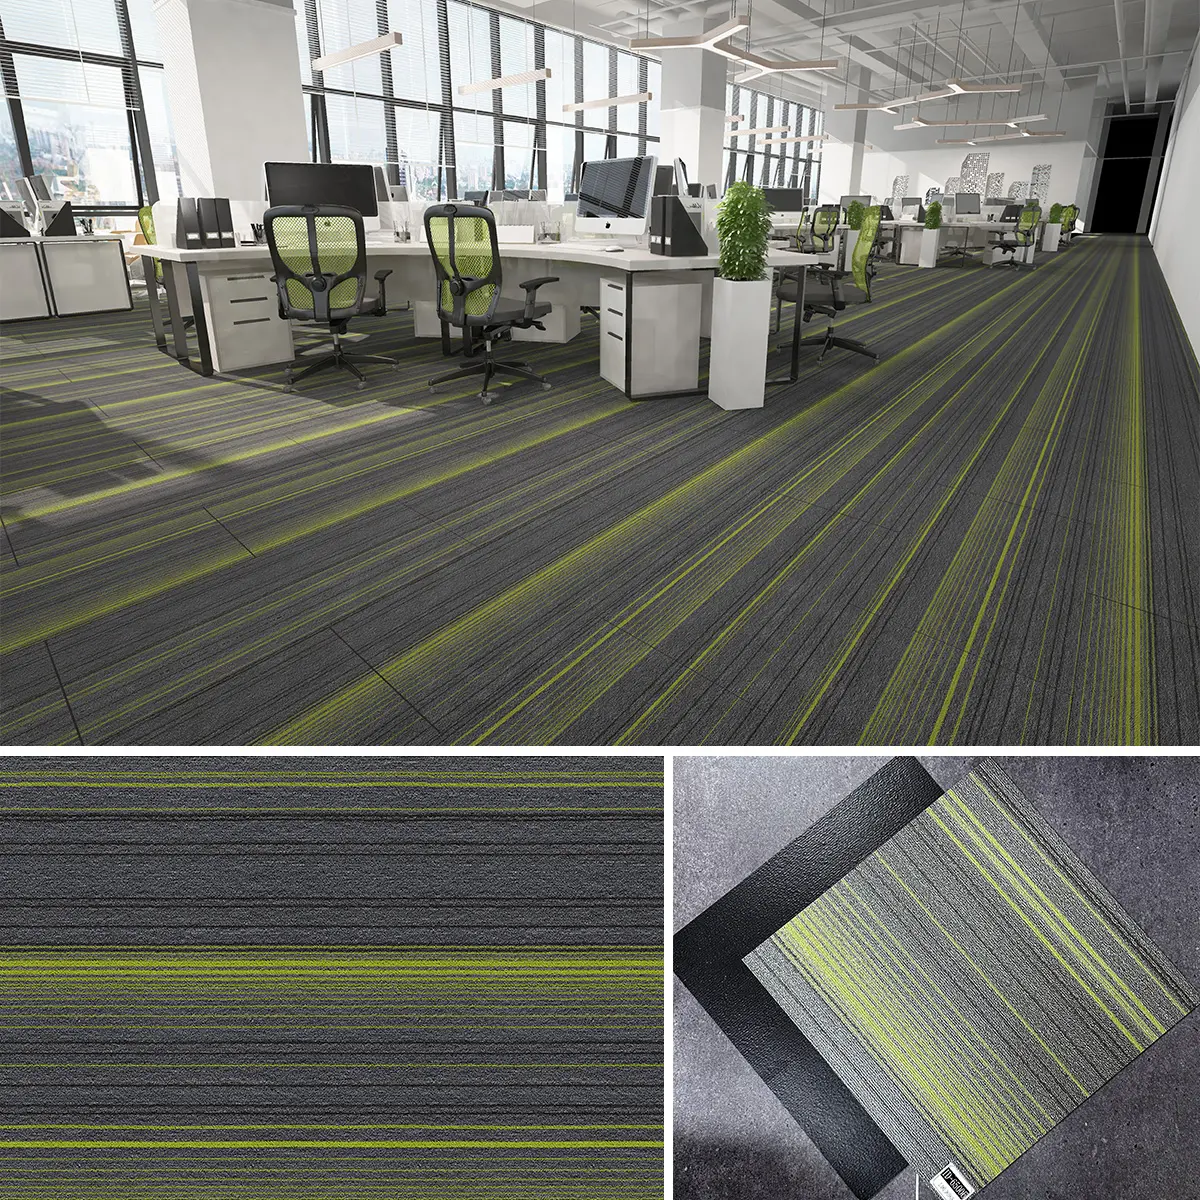 LVT Office Carpet Pattern Flooring Application Show